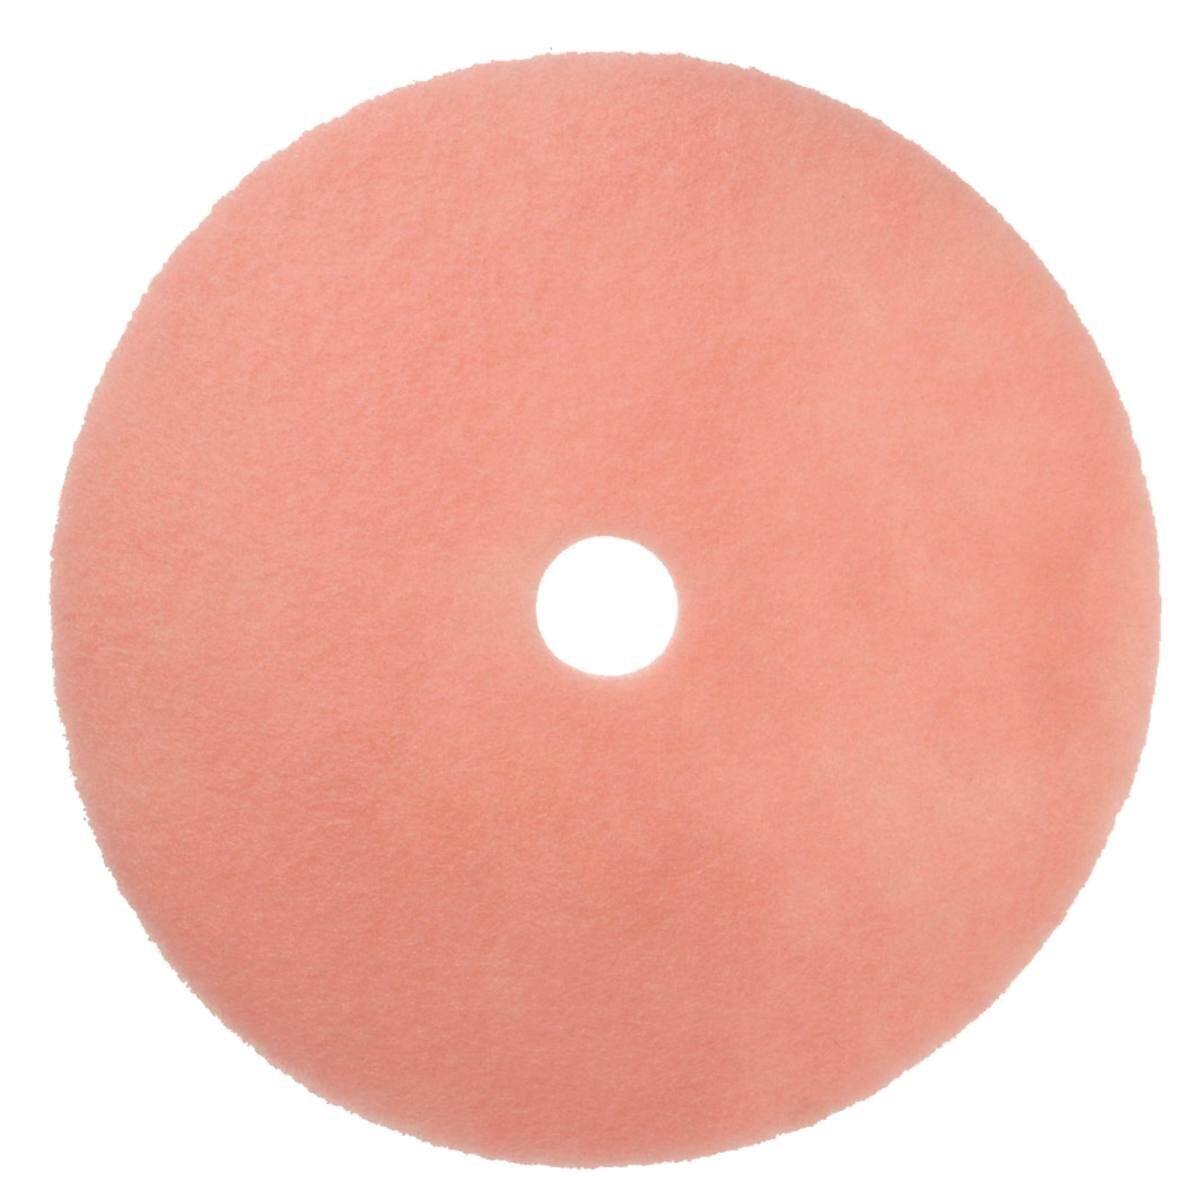 3M Scotch-Brite Cleaning and polishing pad, 430mm Eraser ERAS430 pink